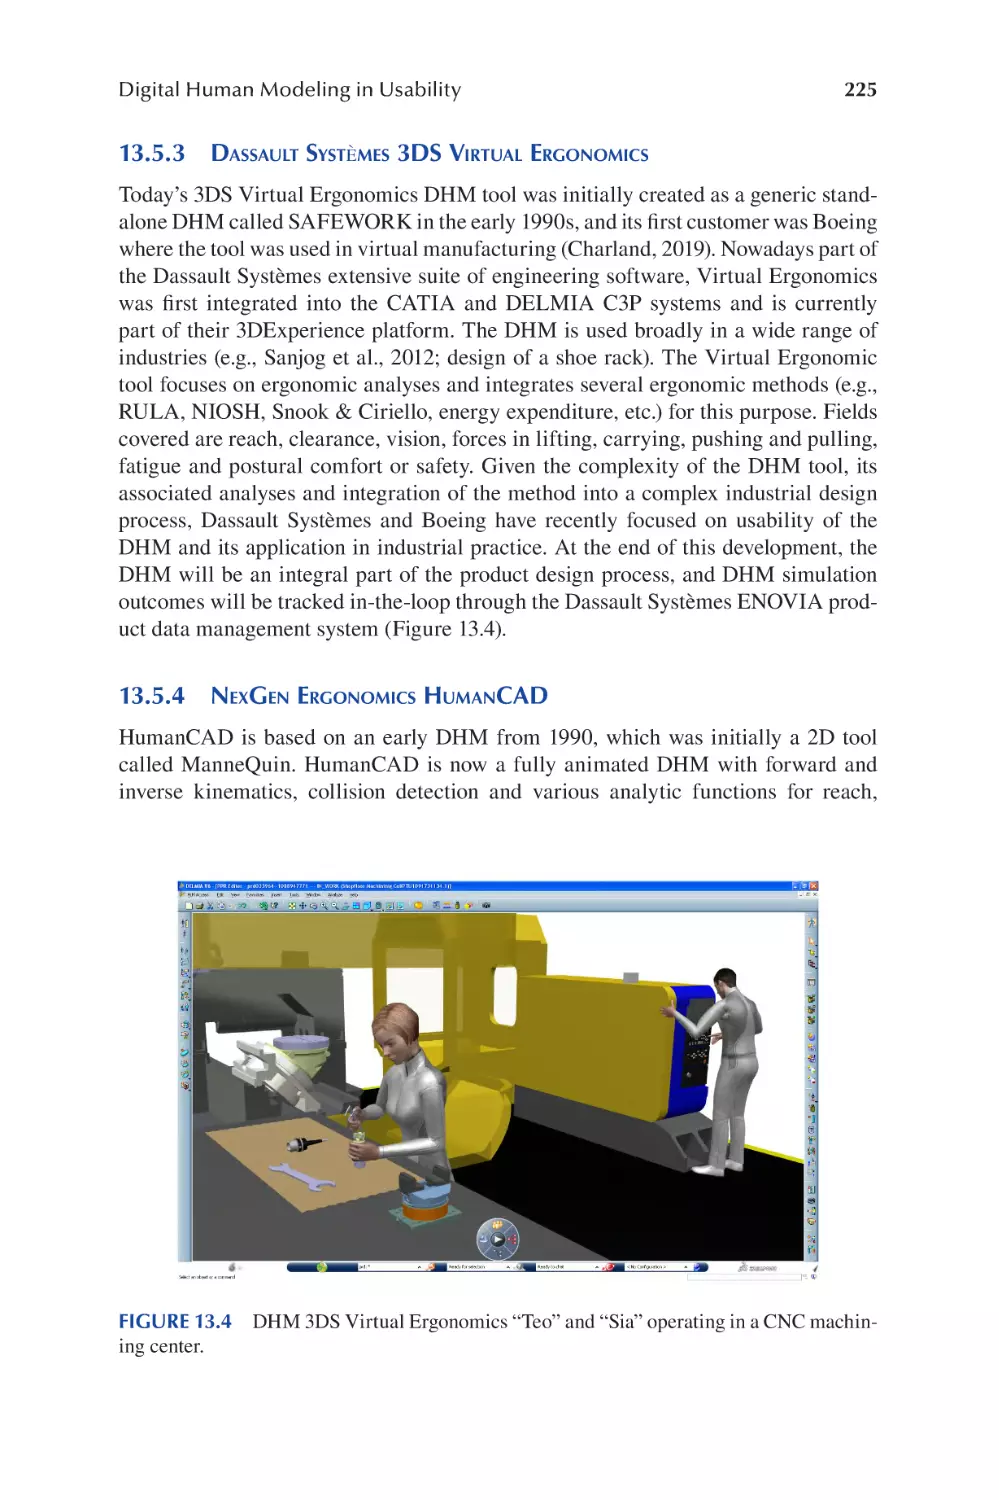 13.5.3 Dassault Systèmes 3DS Virtual Ergonomics
13.5.4 NexGen Ergonomics HumanCAD